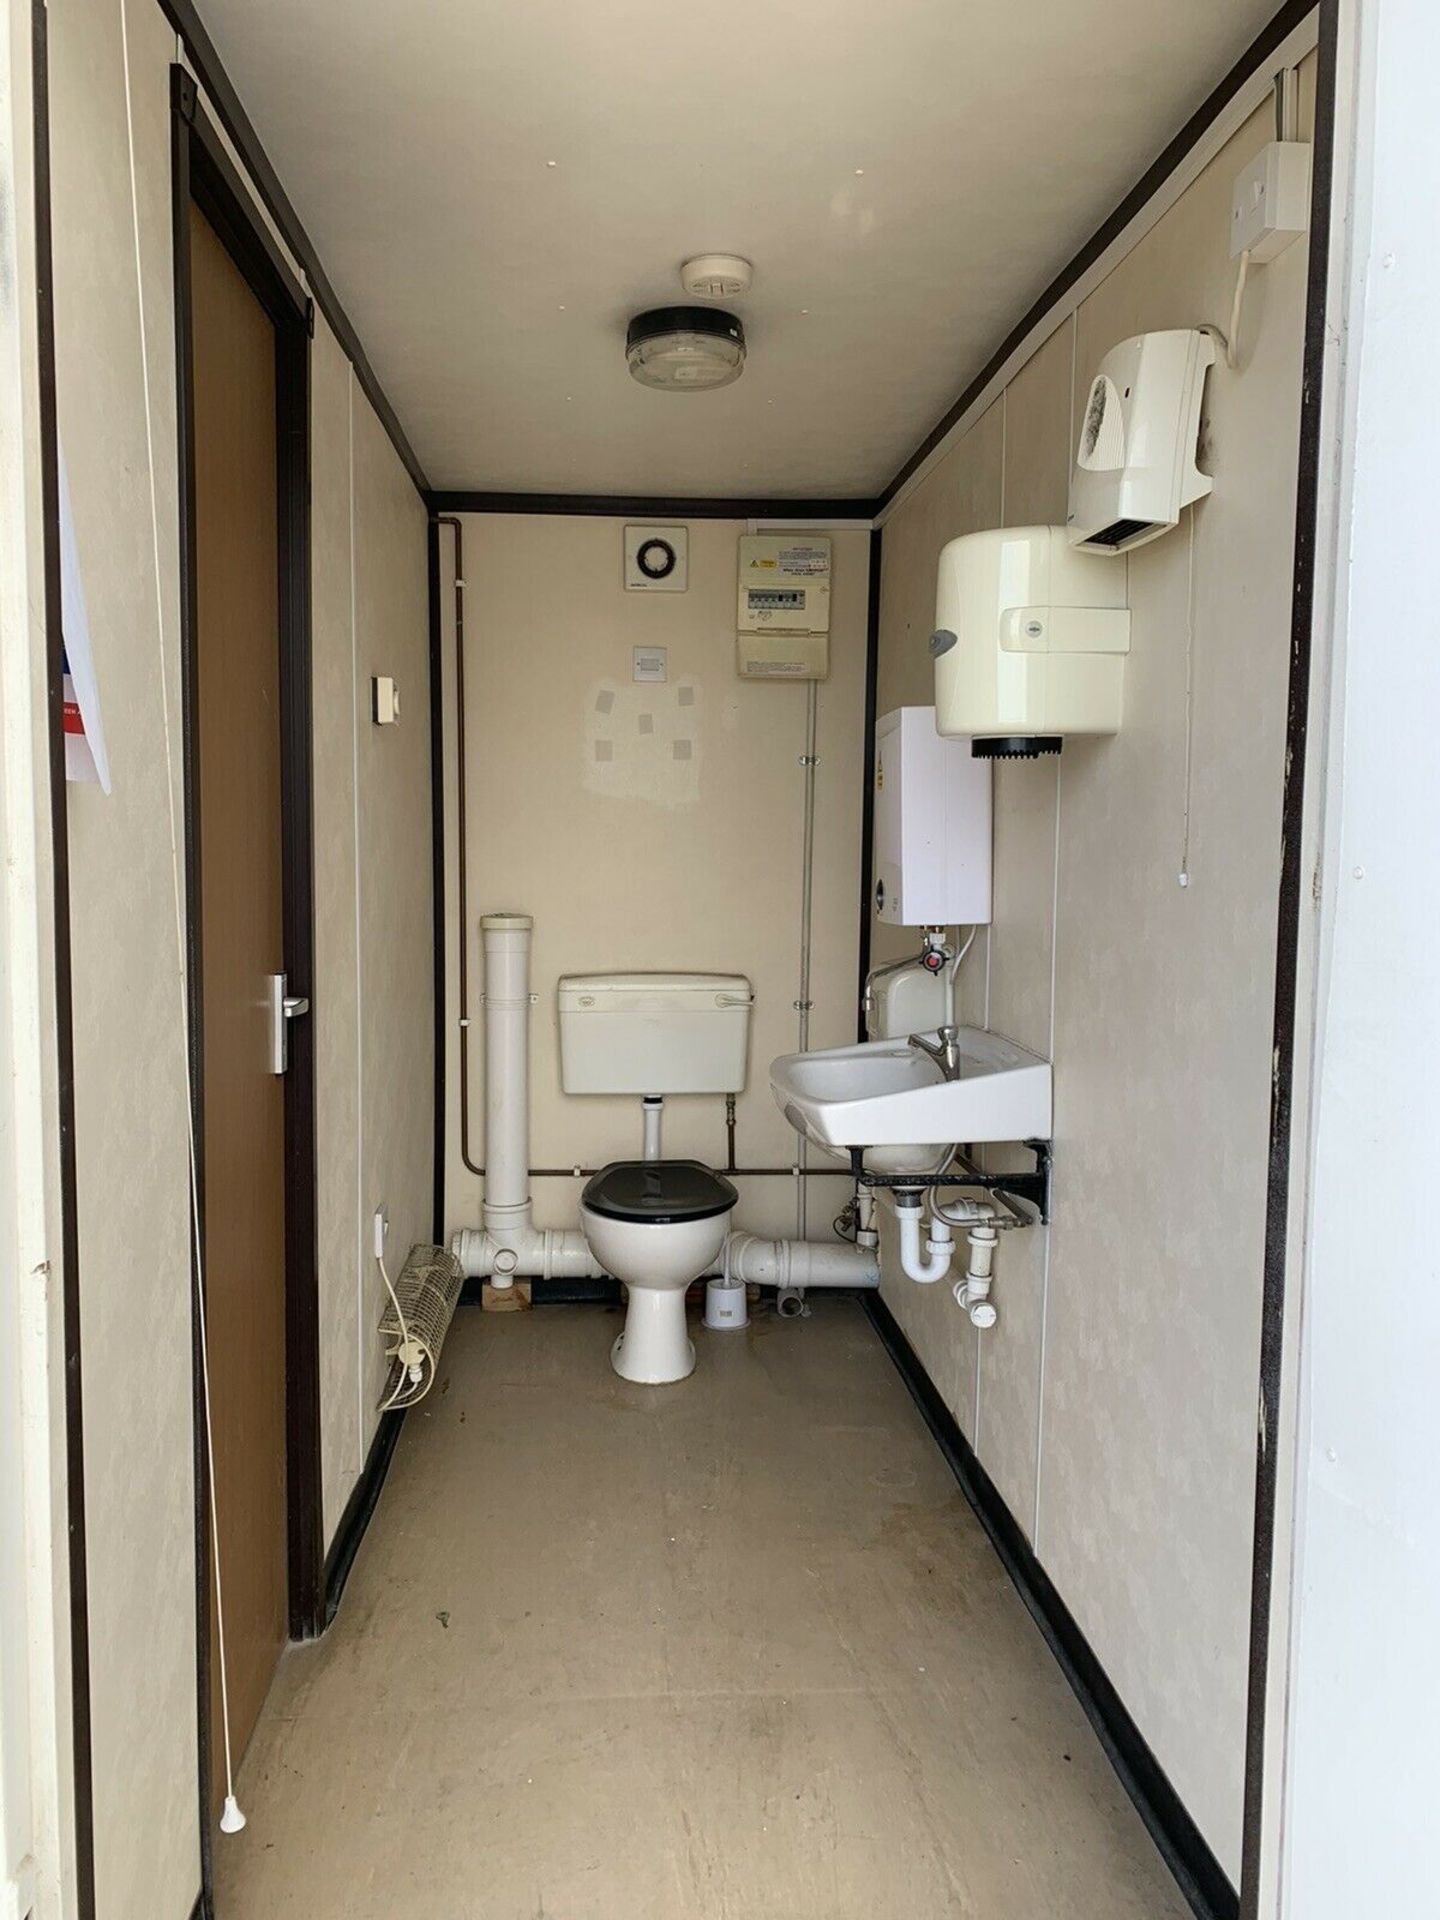 Portable Toilet Block Shower Block Toilet Containe - Image 2 of 12